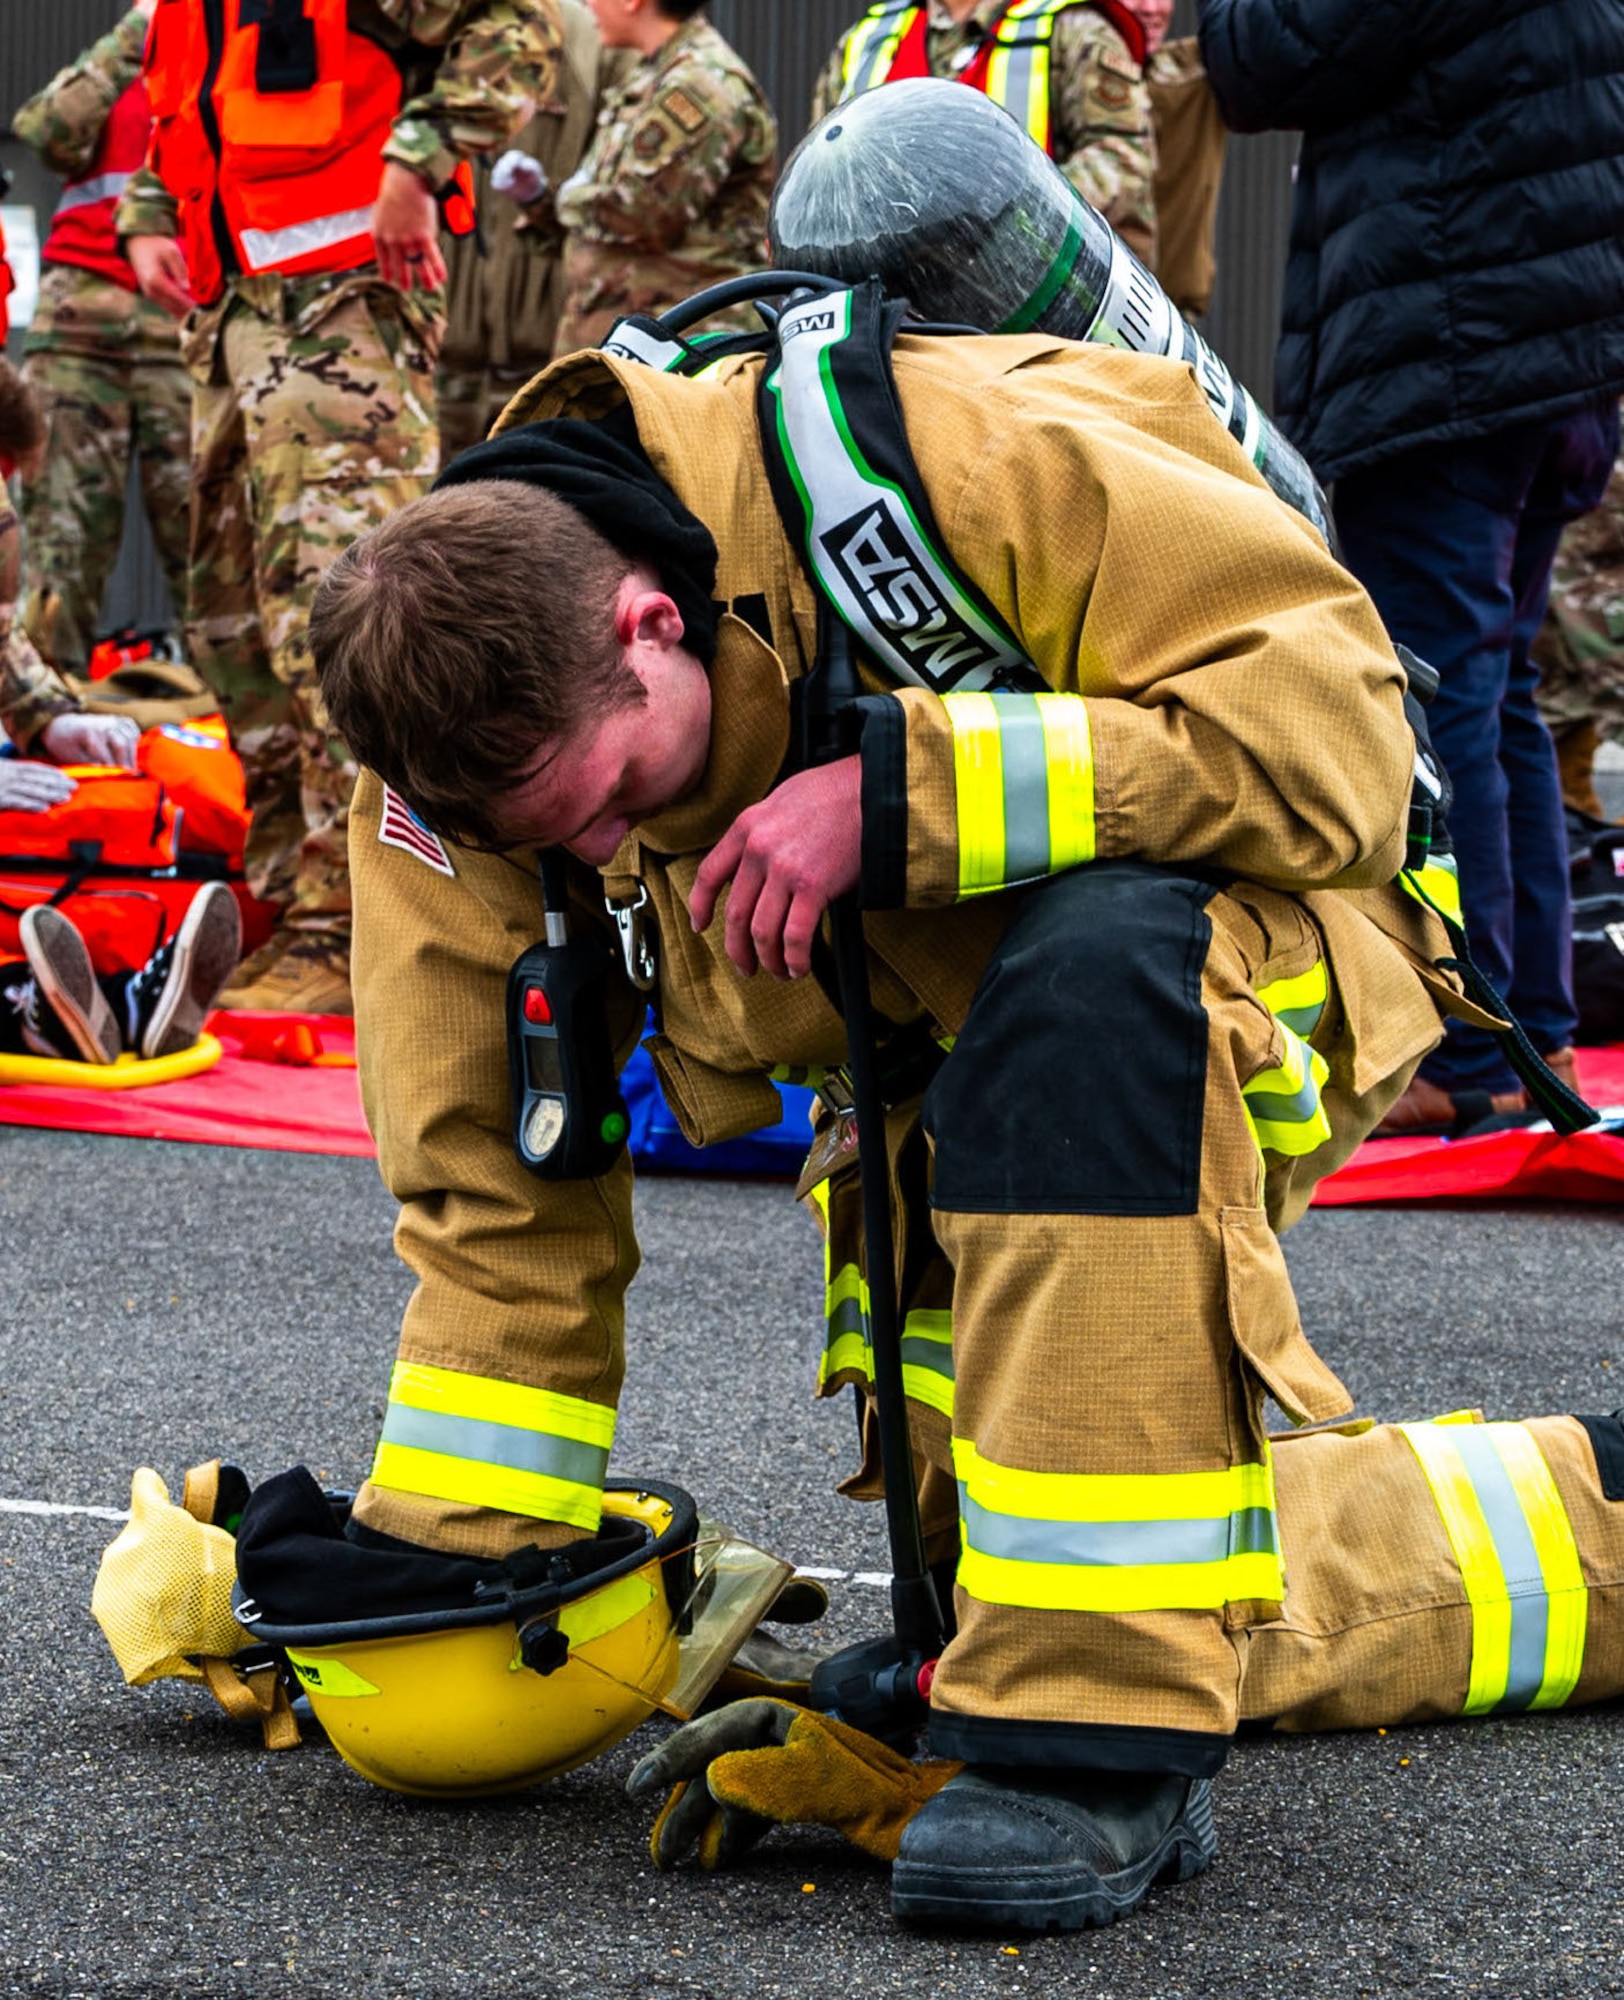 Firefighter kneeling